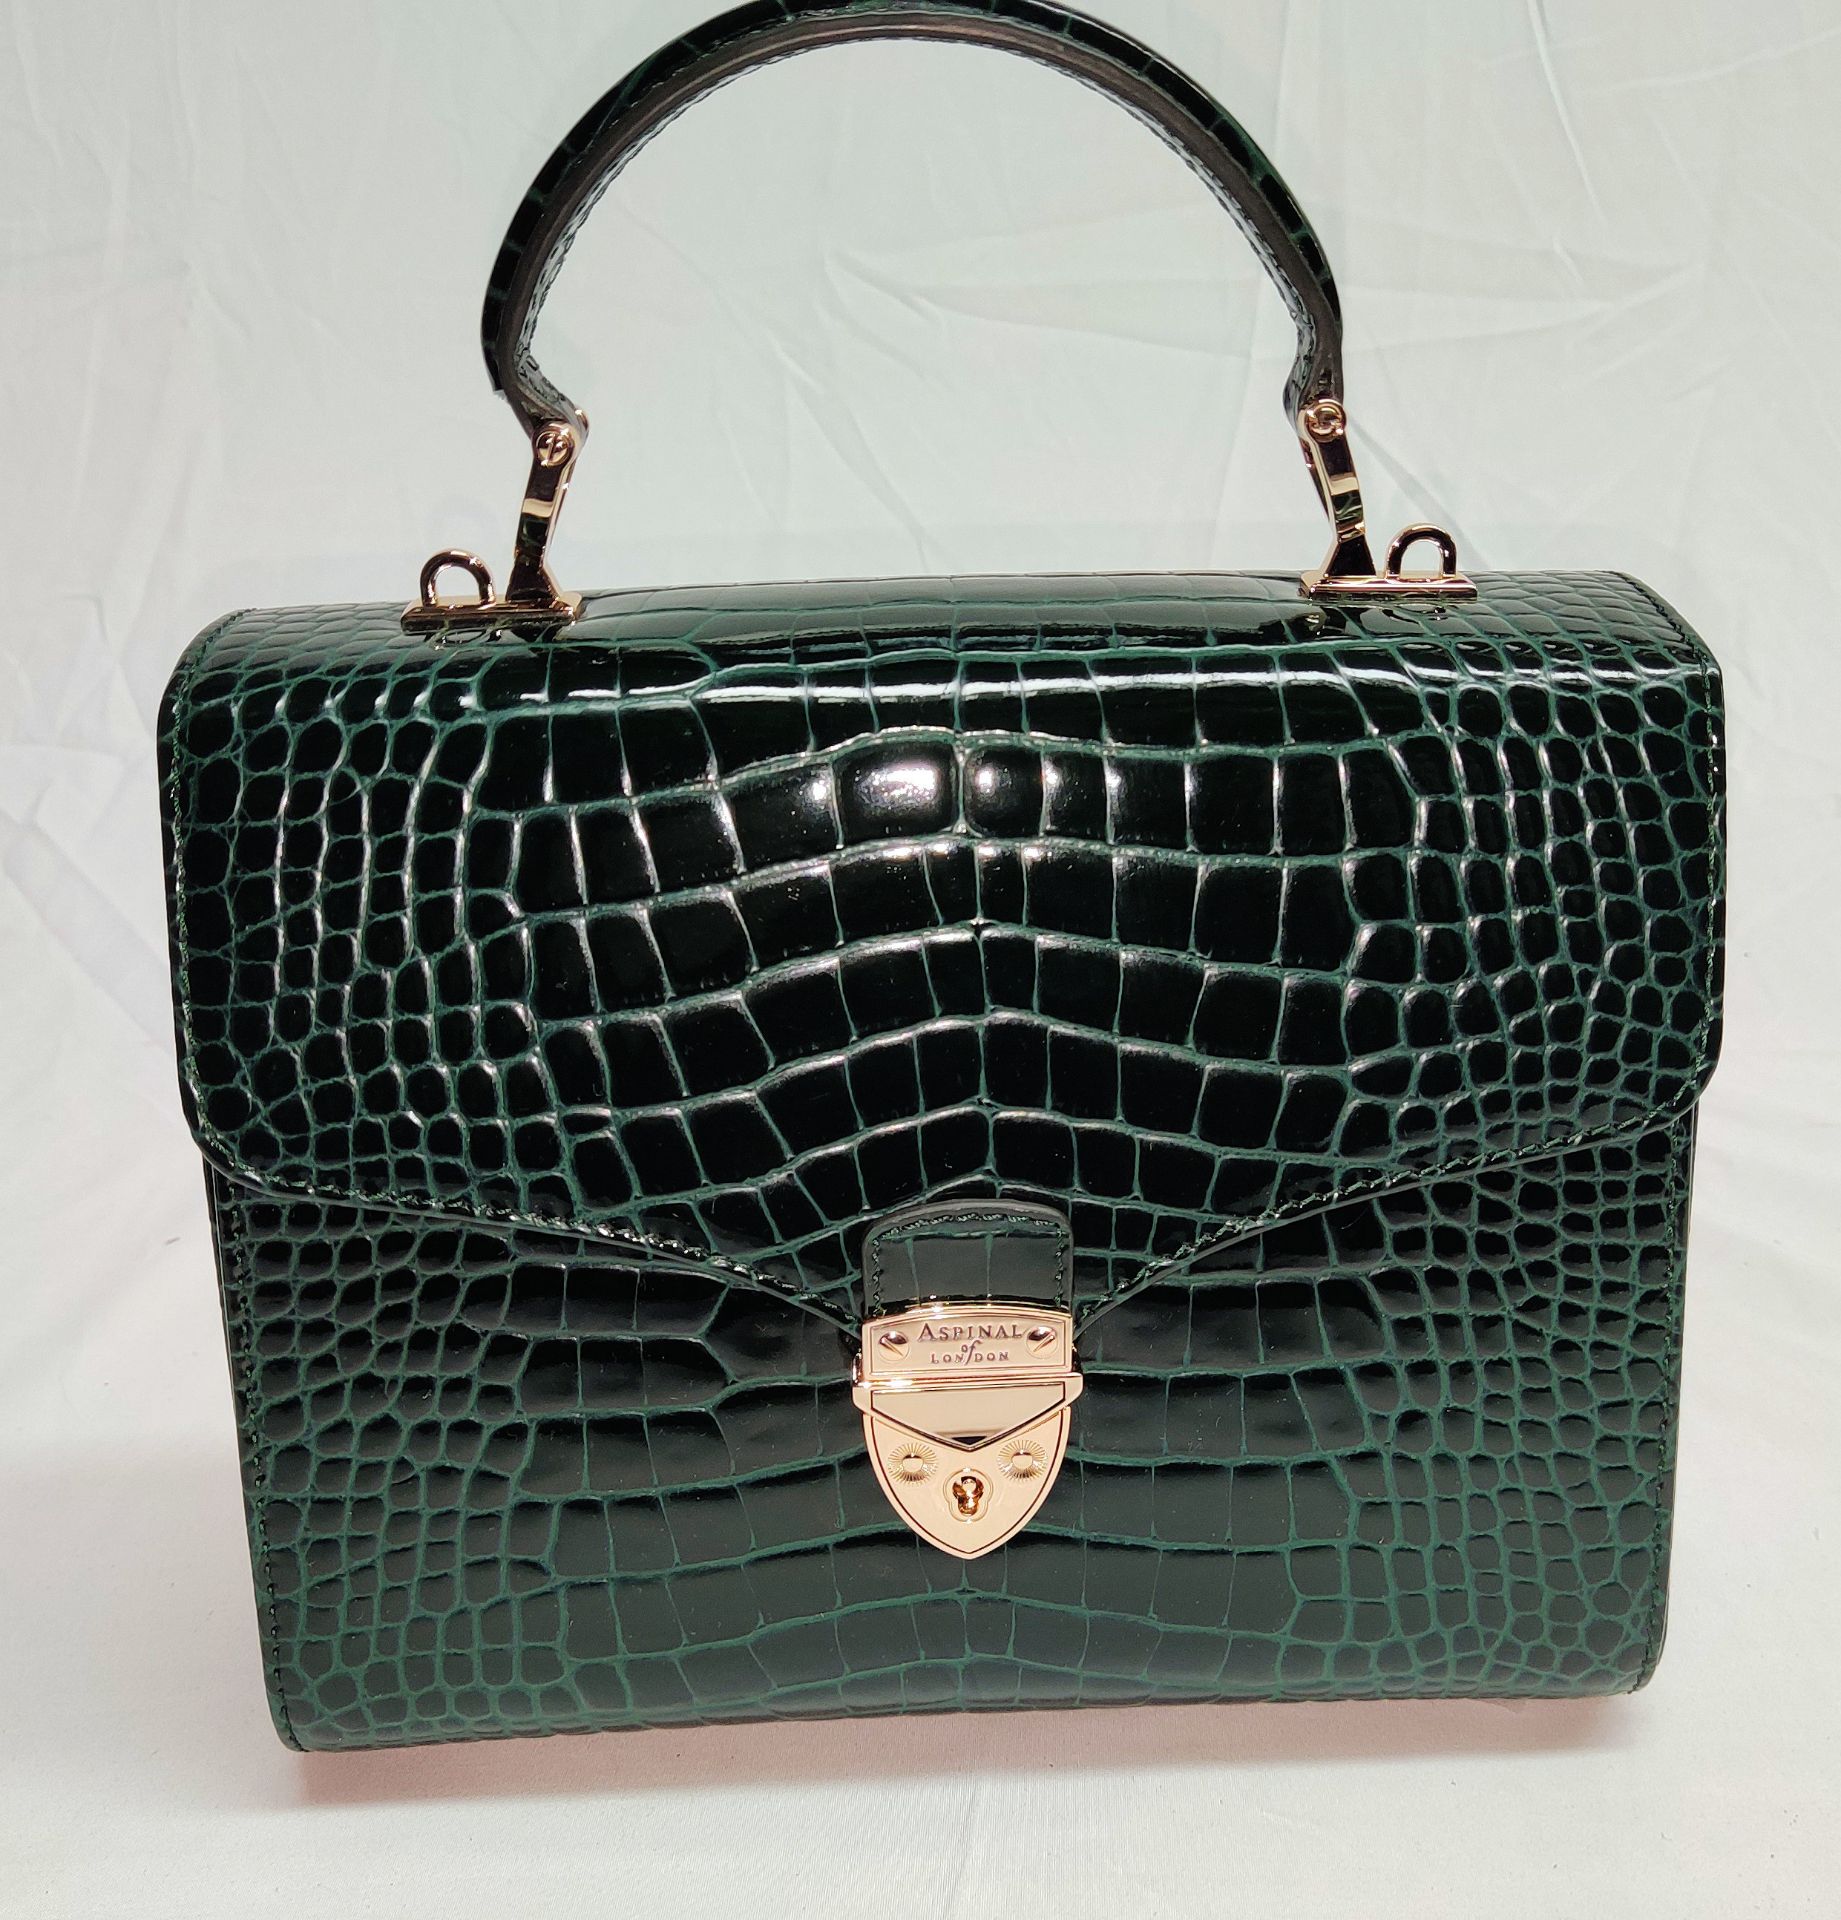 1 x ASPINAL OF LONDON Mayfair Bag - Evergreen Patent Croc - Original RRP £695.00 - Image 4 of 23